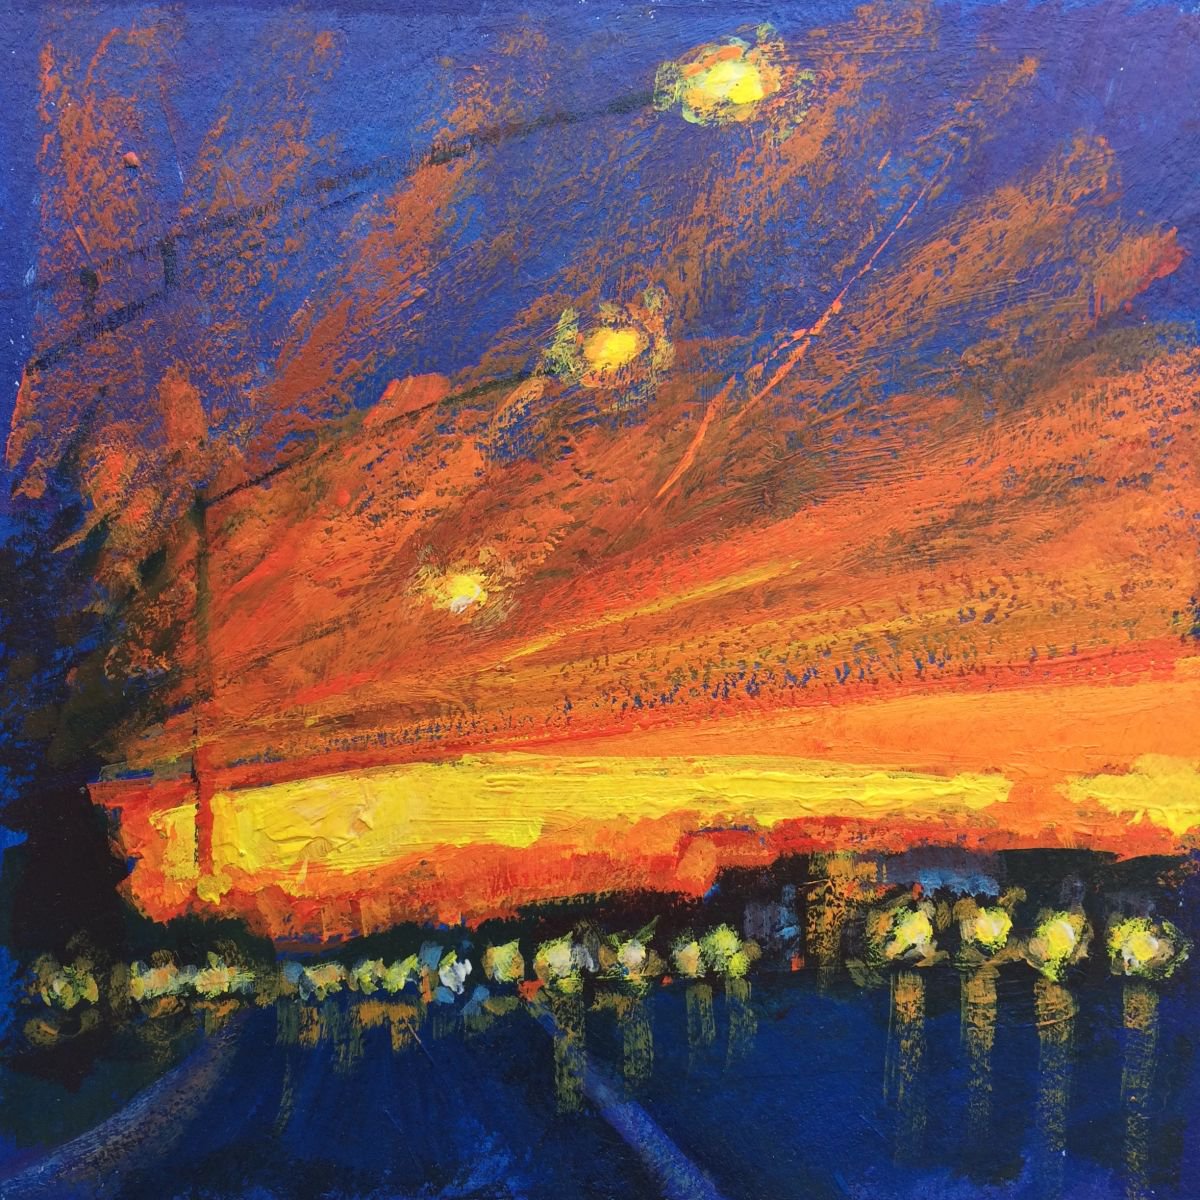 Rt. 287 Sunrise by Jimmy Leslie